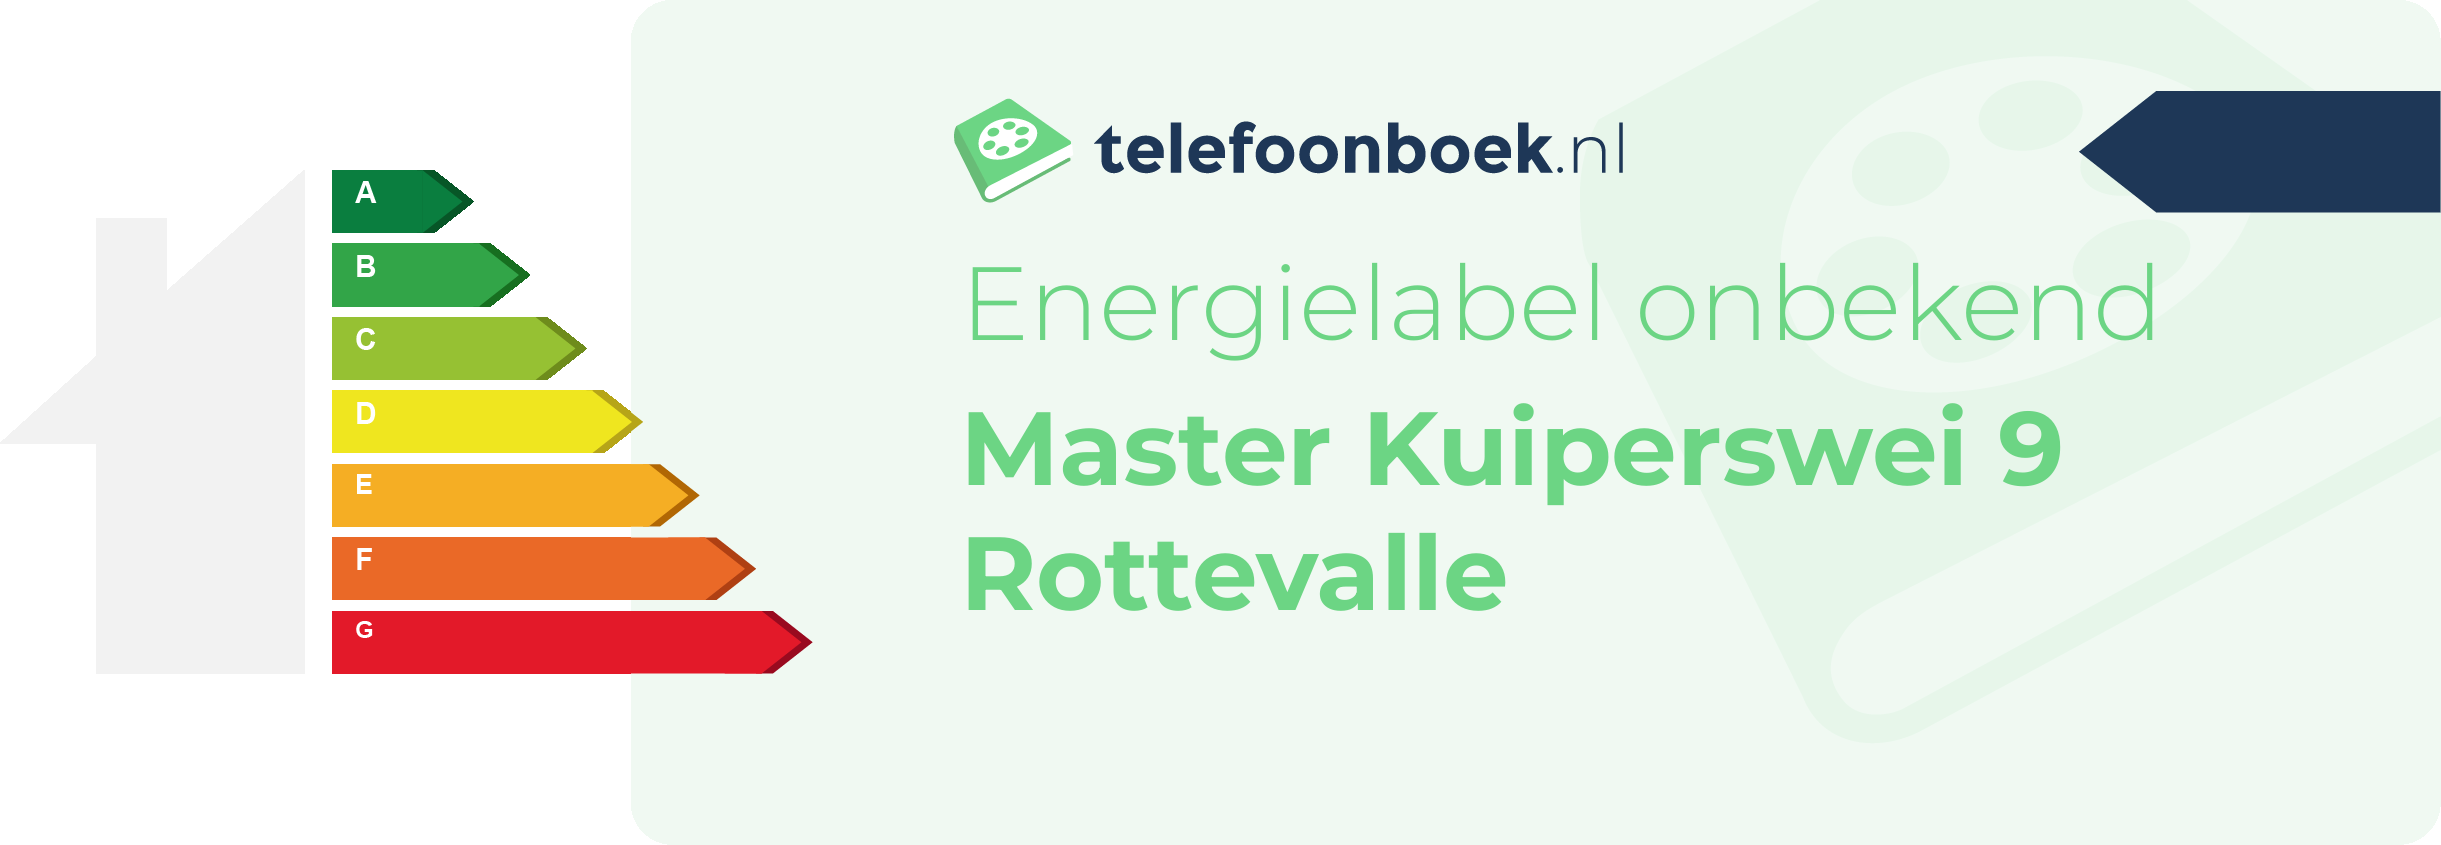 Energielabel Master Kuiperswei 9 Rottevalle